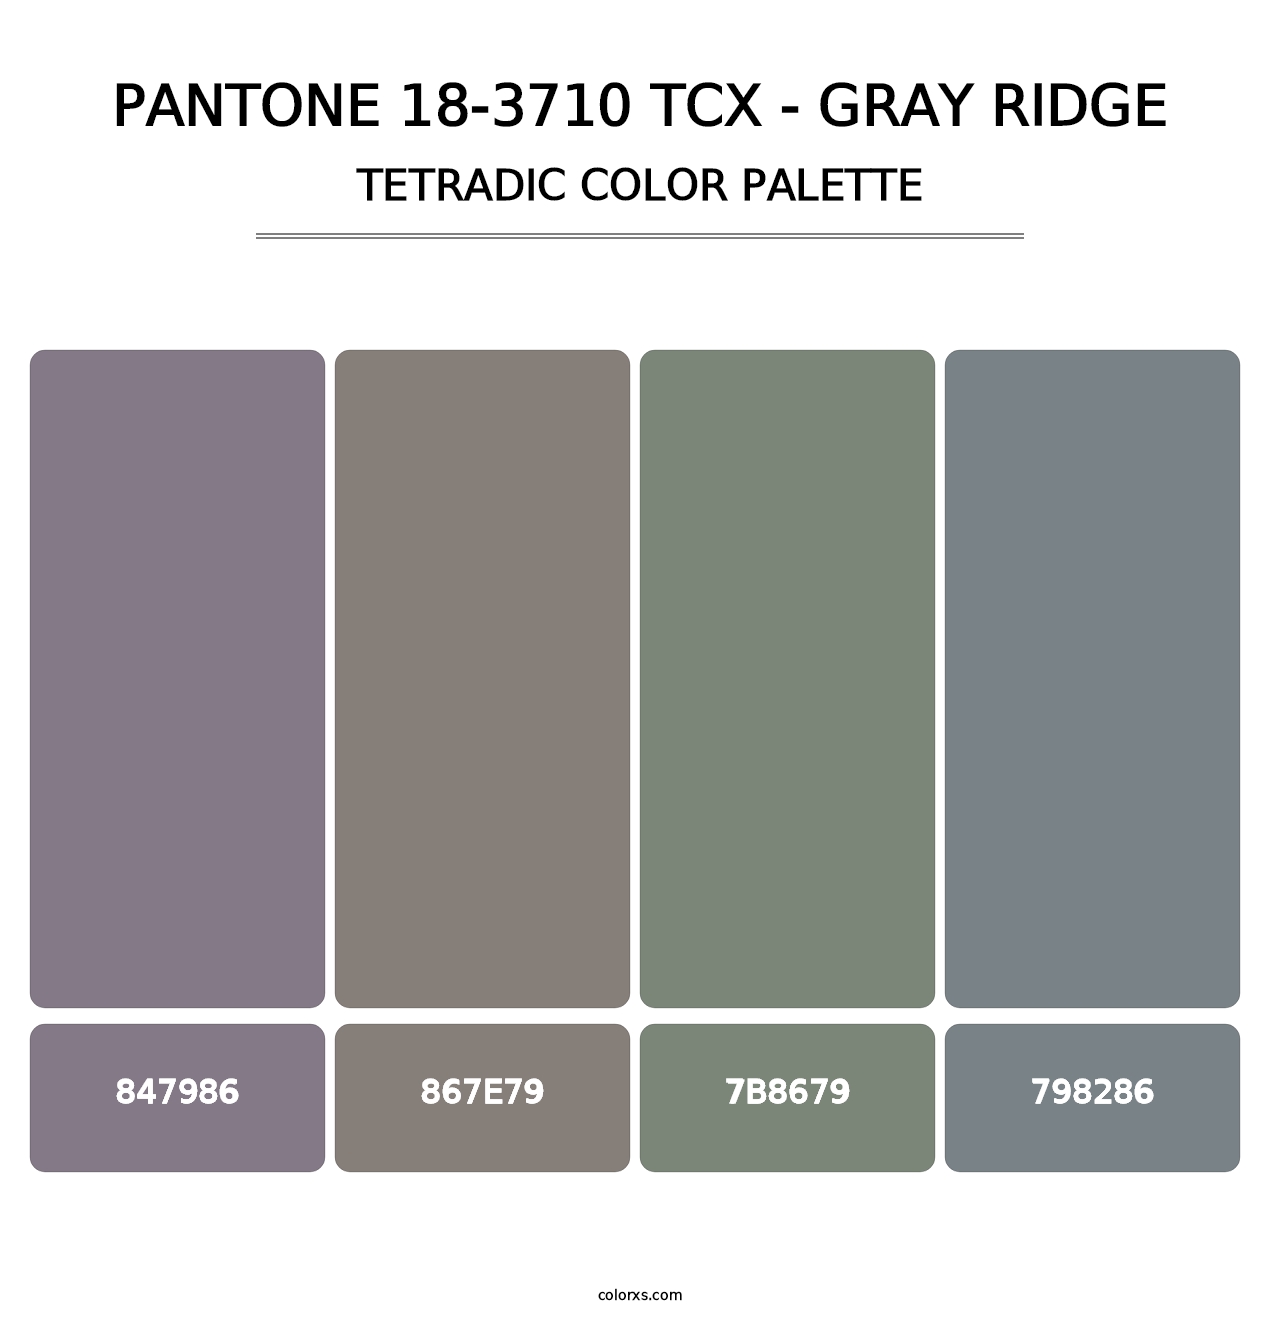 PANTONE 18-3710 TCX - Gray Ridge - Tetradic Color Palette